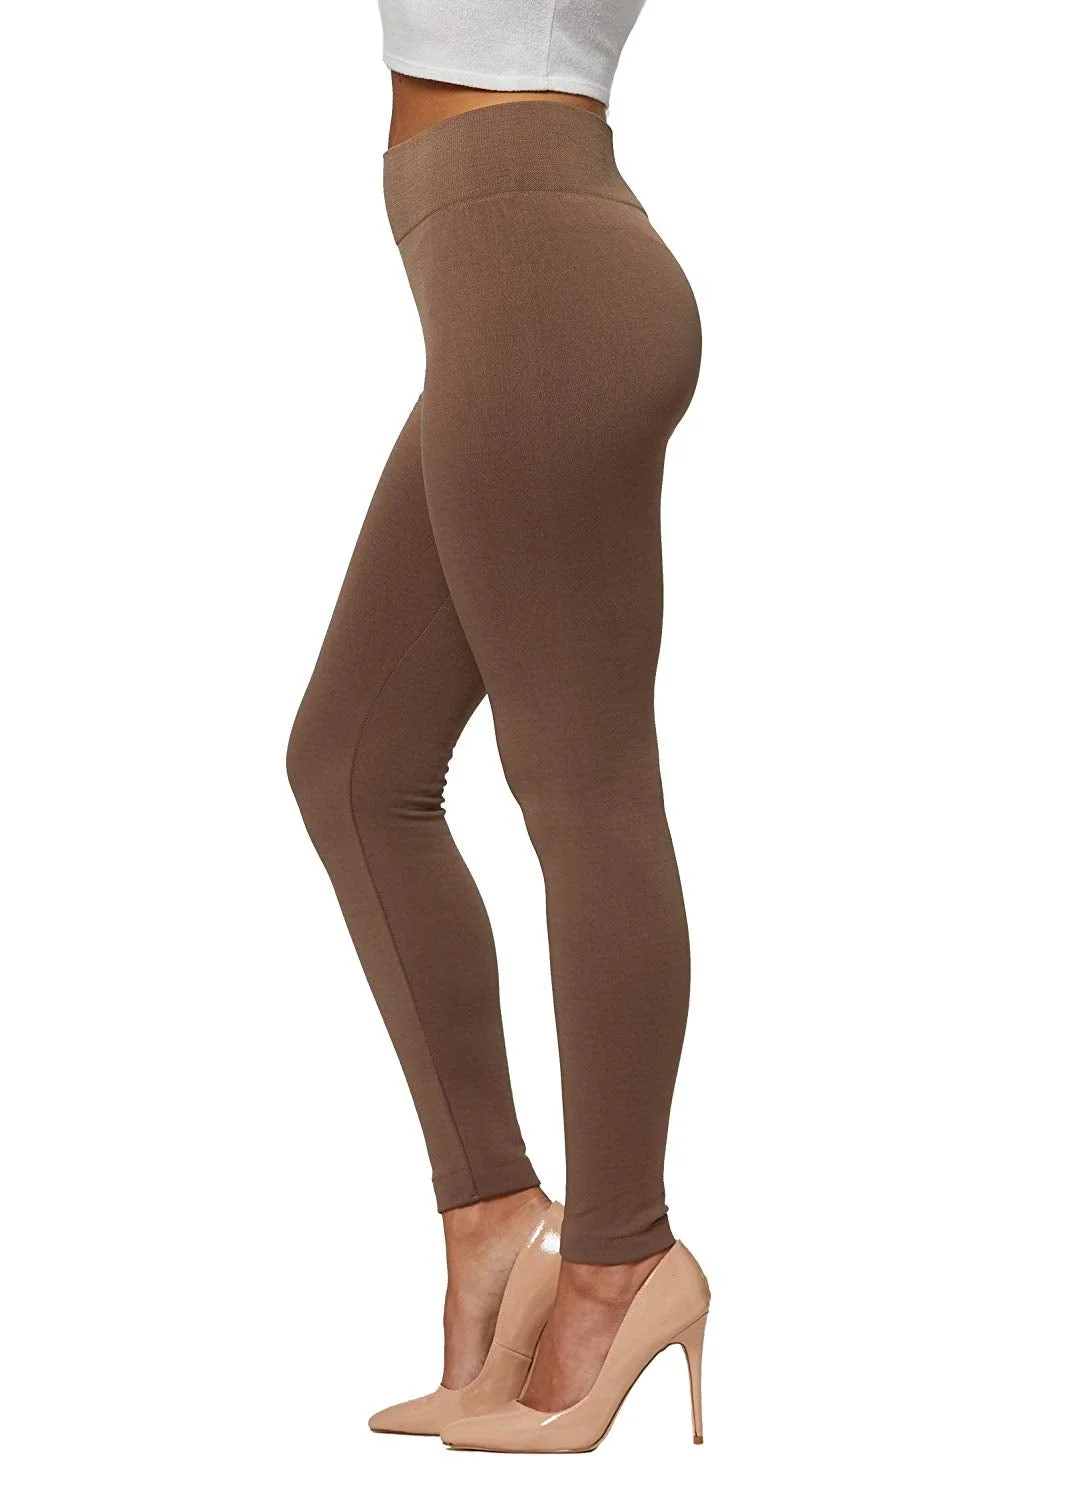 Women's Fleece Lined Leggings - High Waist - Regular and Plus Size - 20+ Colors